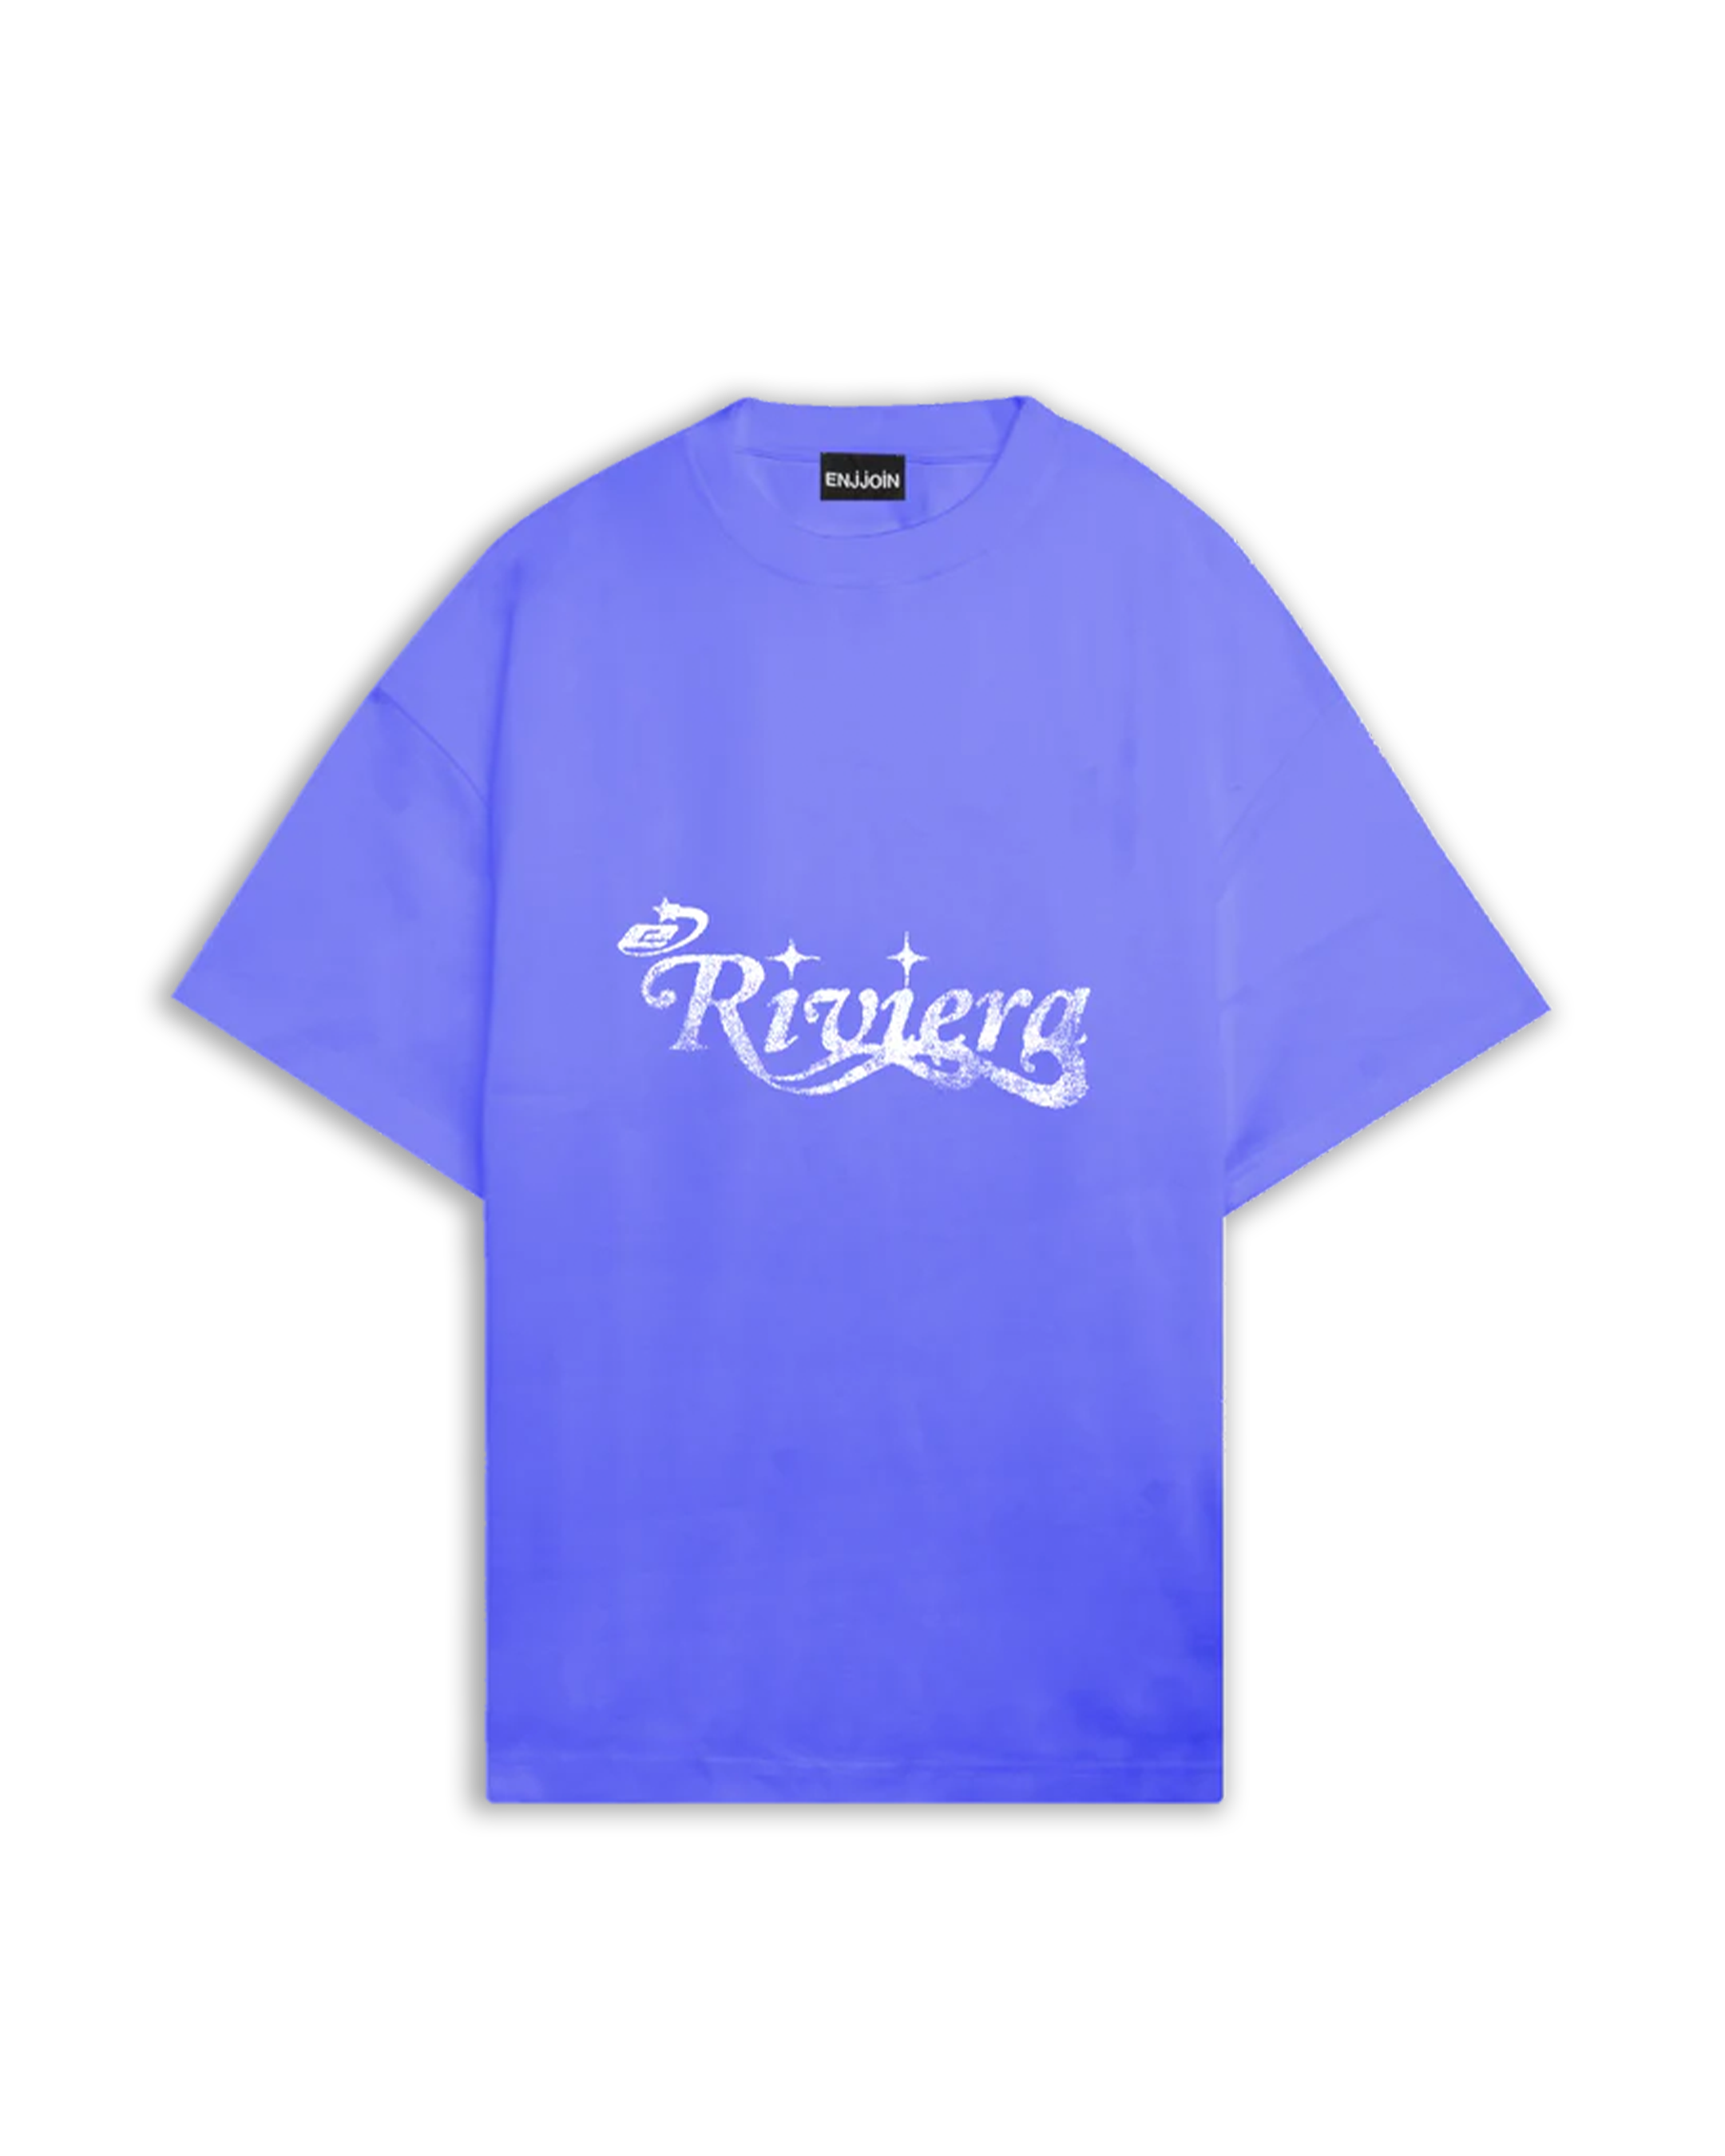 Riviera T-Shirt Sky Blue